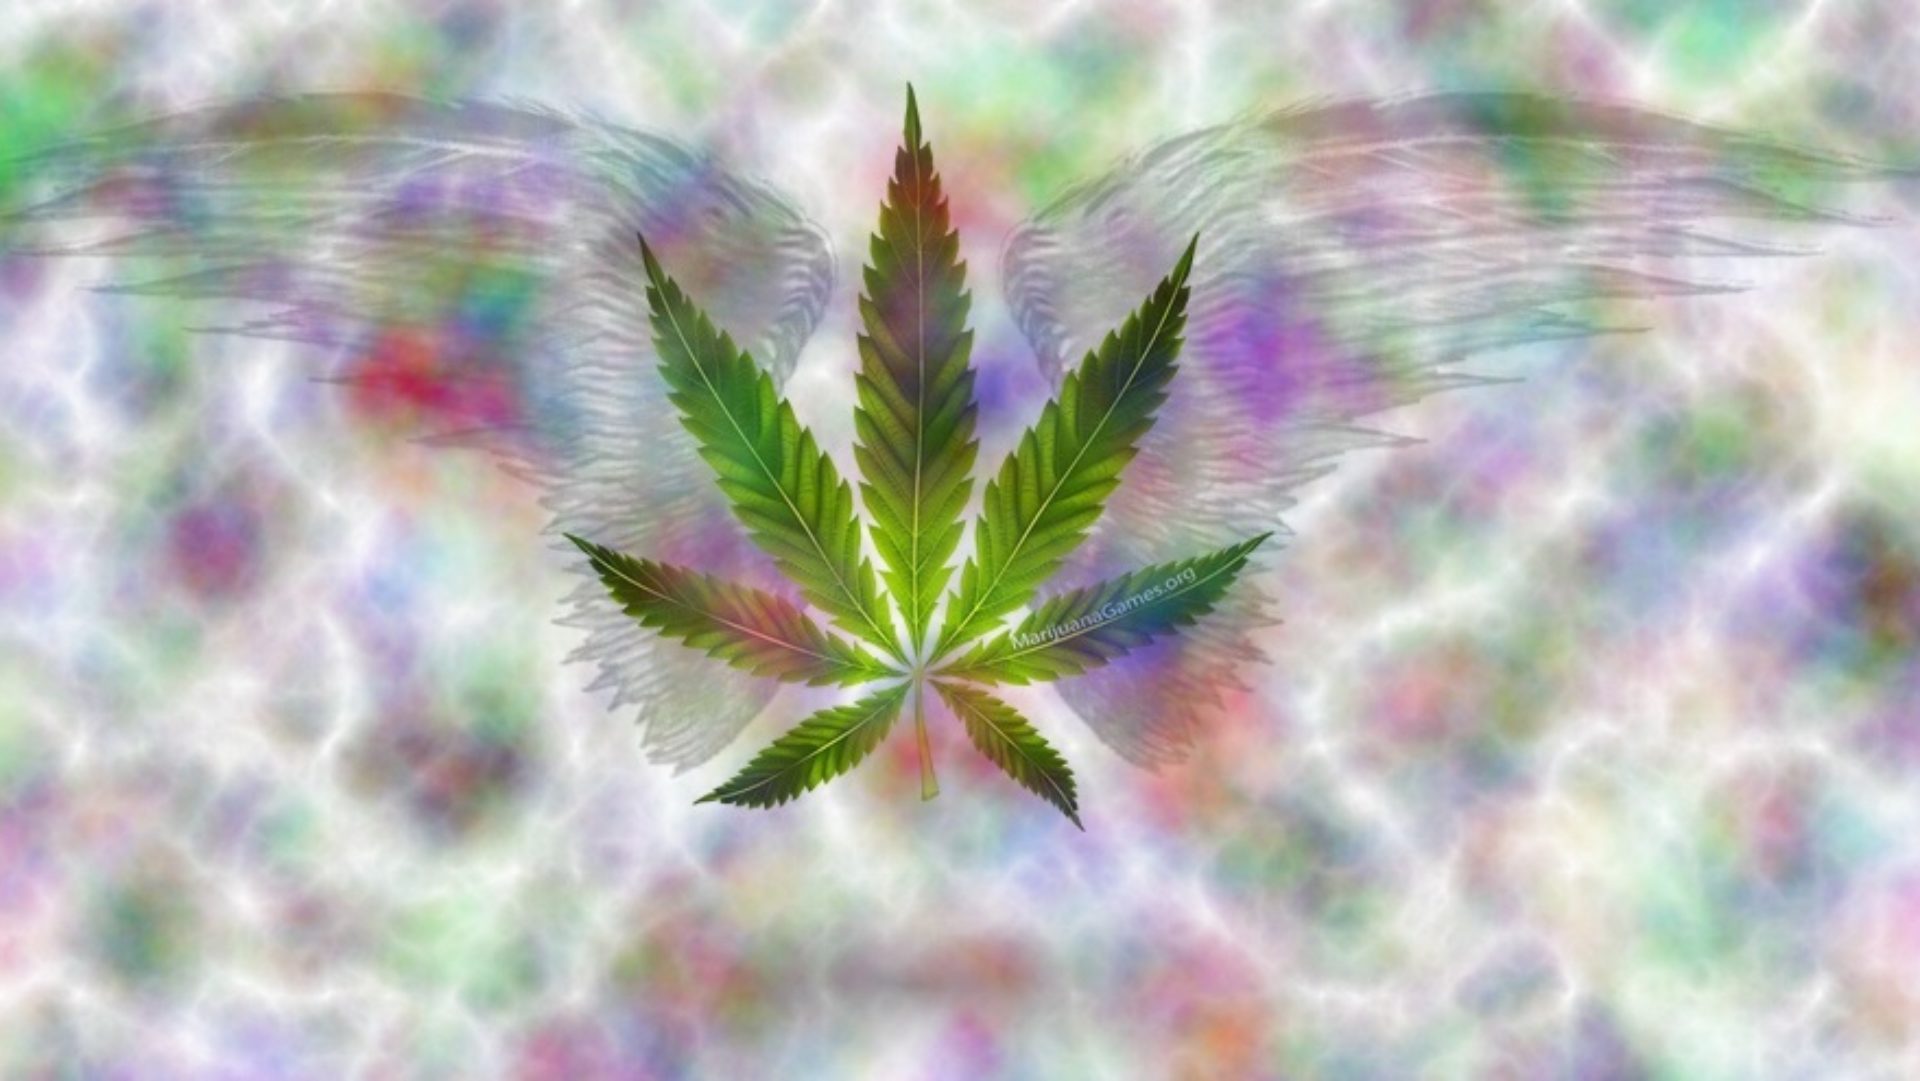 Weed Jokes – Marijuana Games, Reviews, Research and More